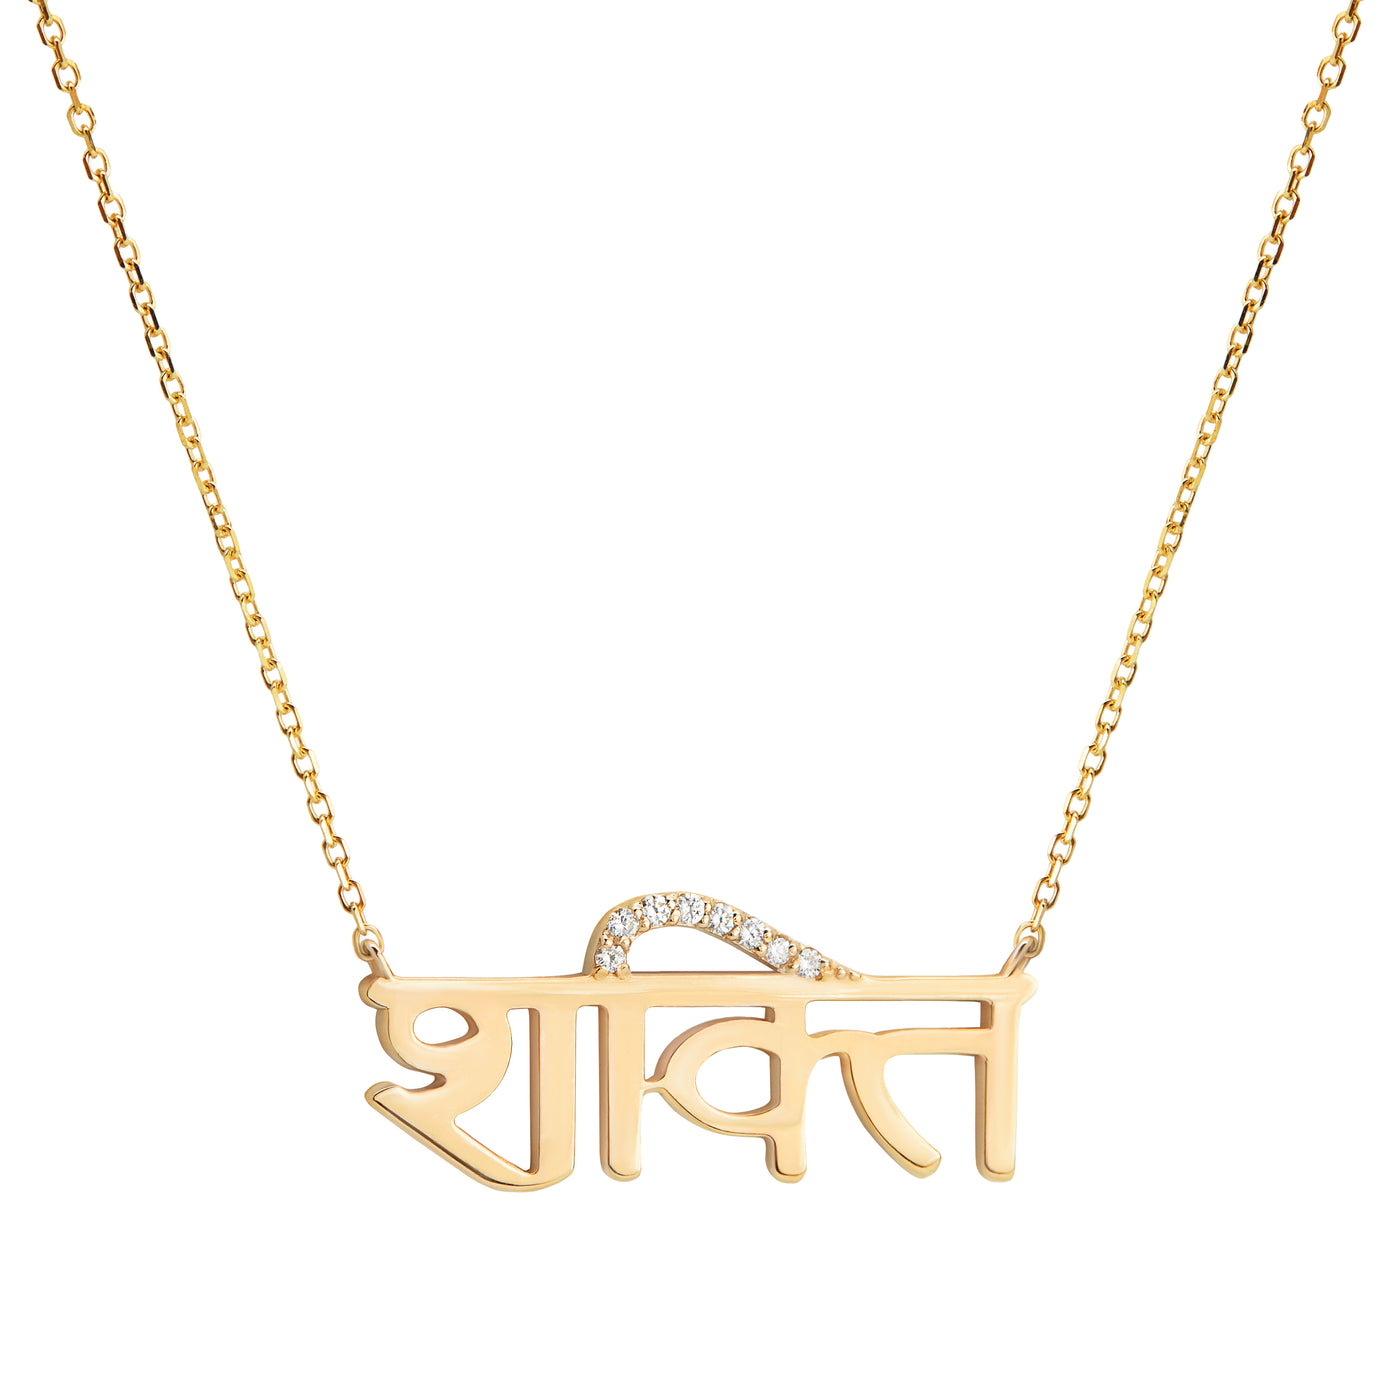 14k Karat yellow gold Shakti-strength necklace with diamonds on white background